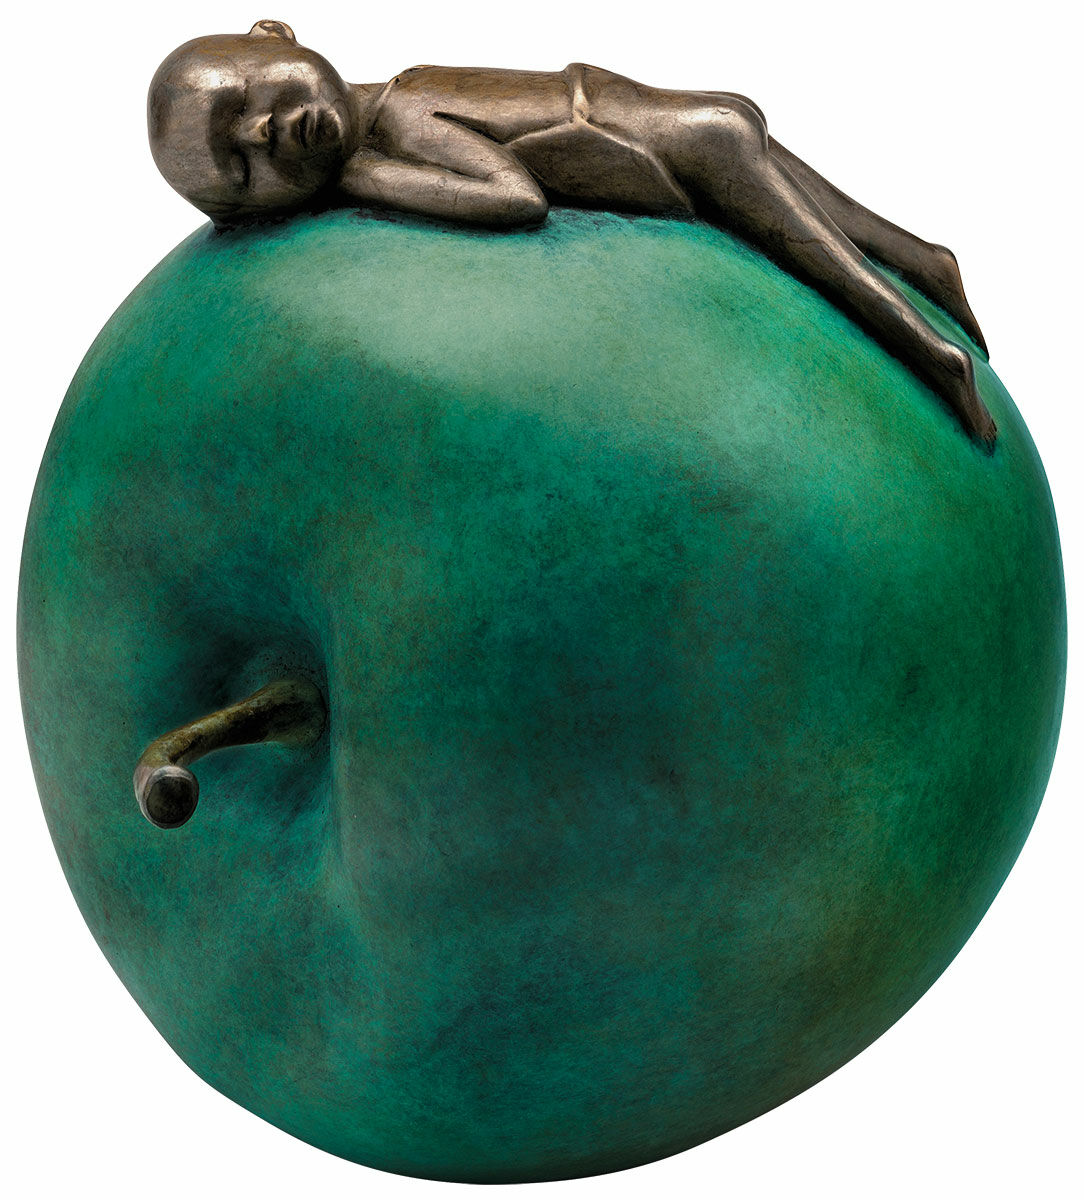 Sculptuur "De kleine prins" (2015), brons von Chen Jinqing